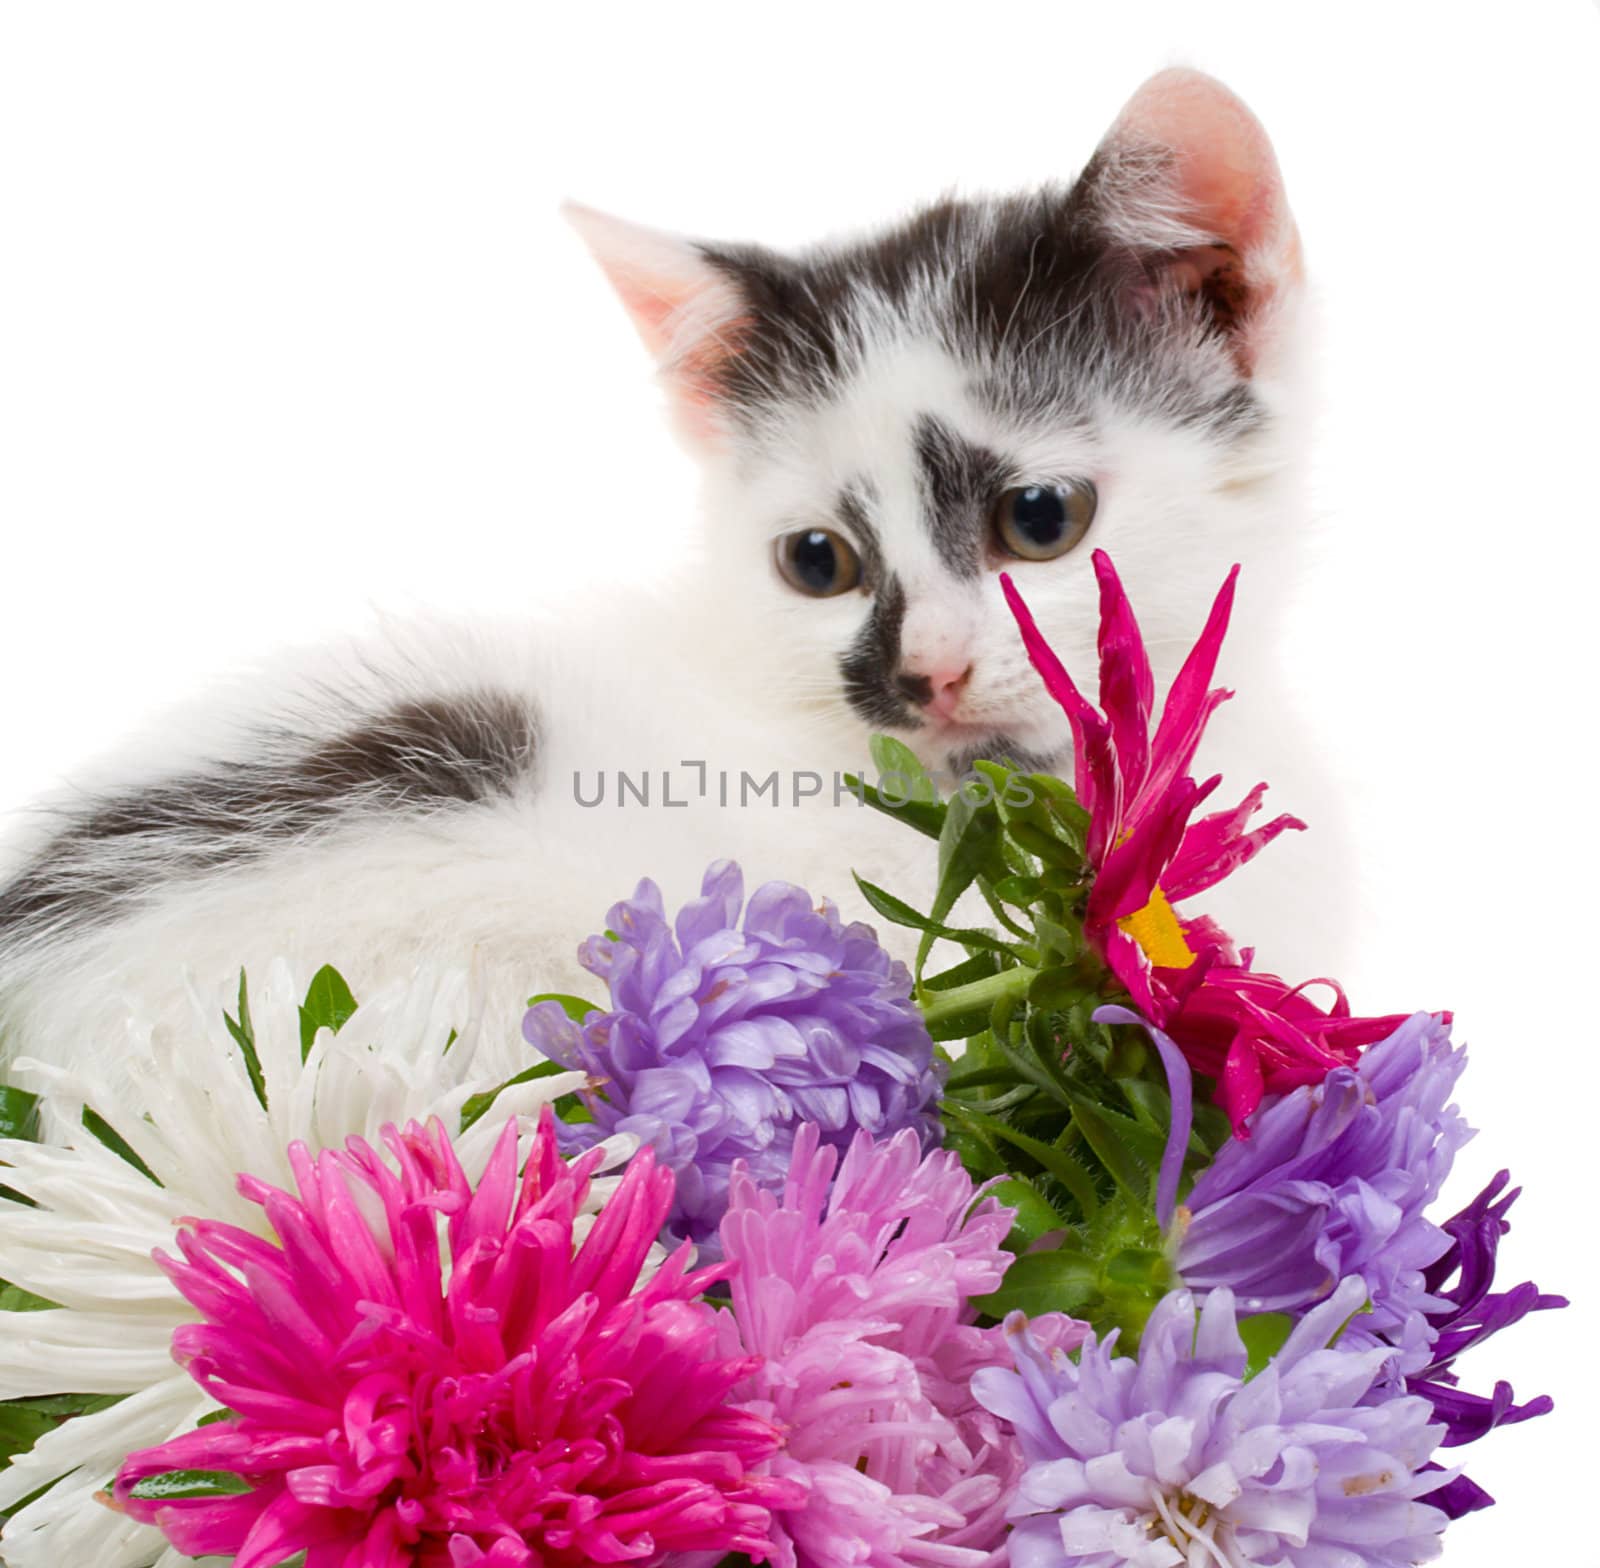 small kitten sitting near flowers, isolated on white